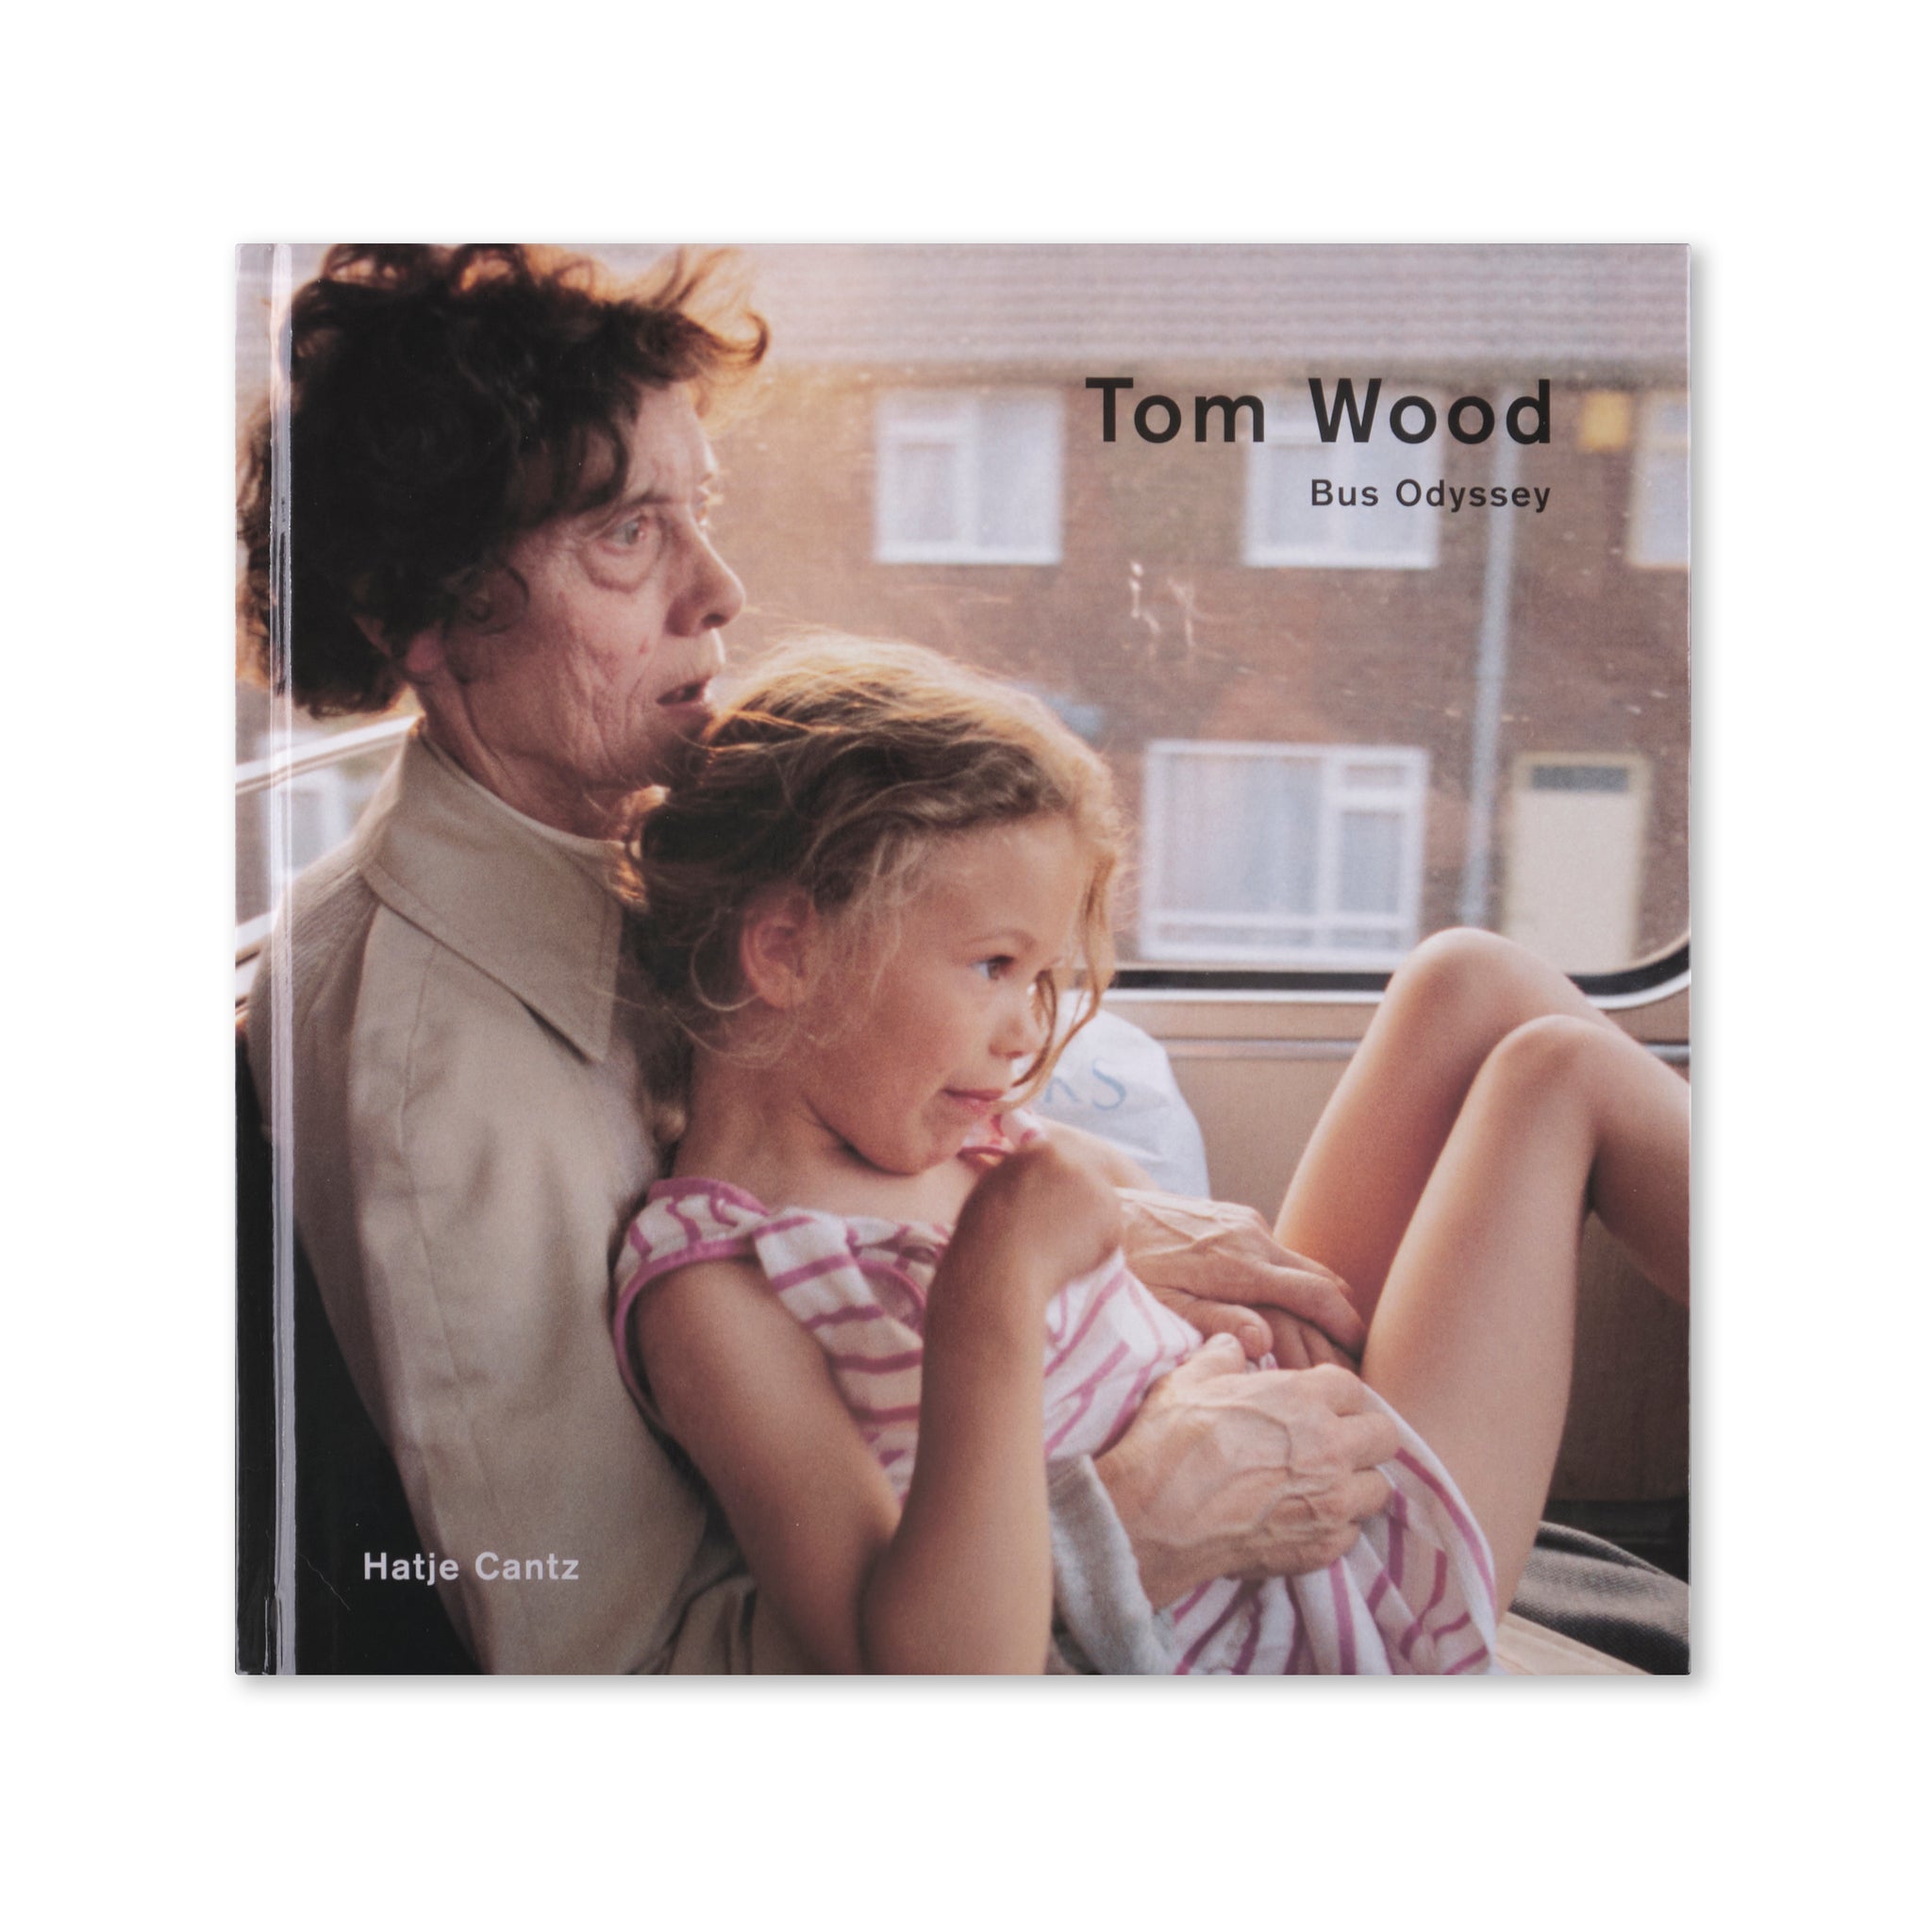 Tom Wood - Bus Odyssey